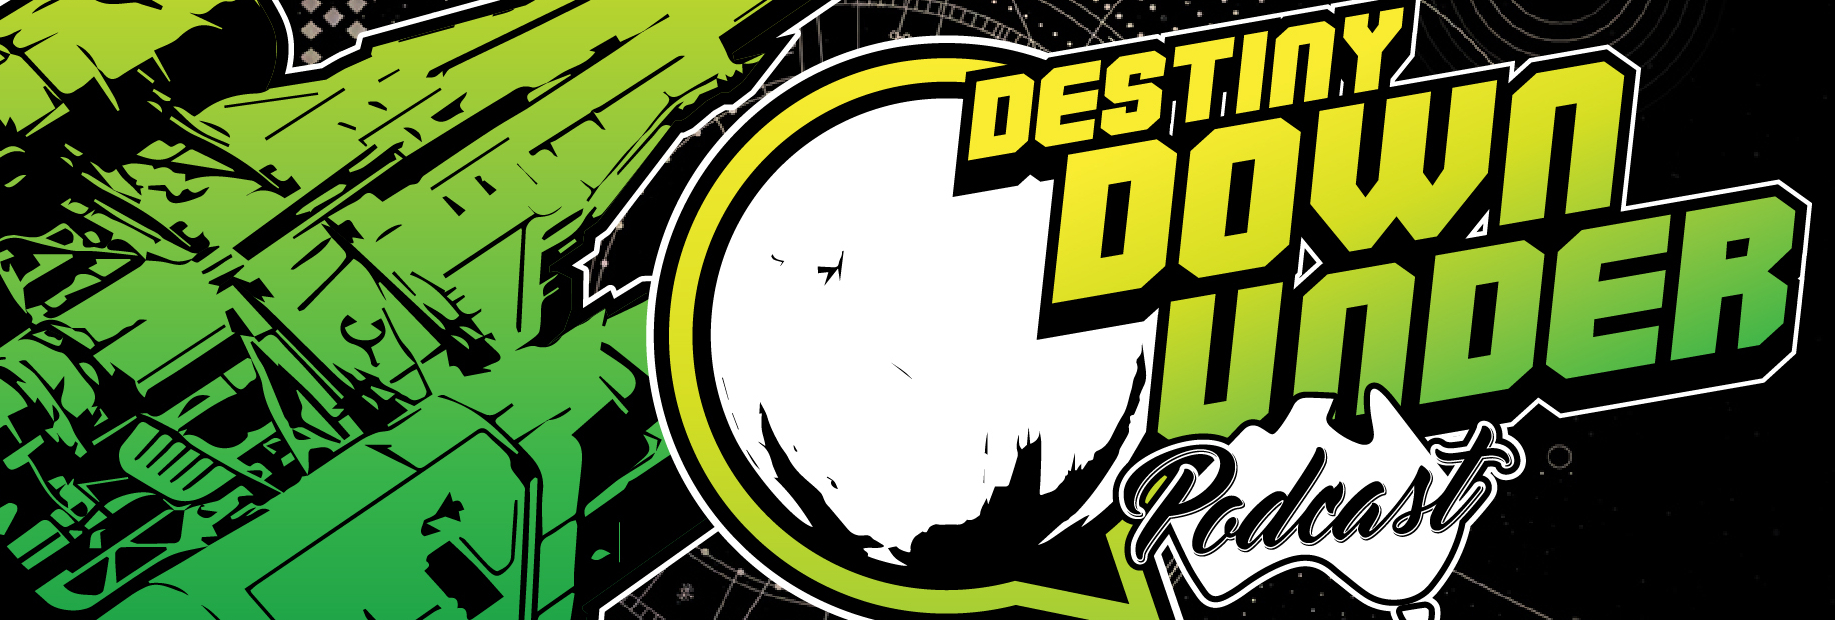 Destiny Down Under Podcast header image 1